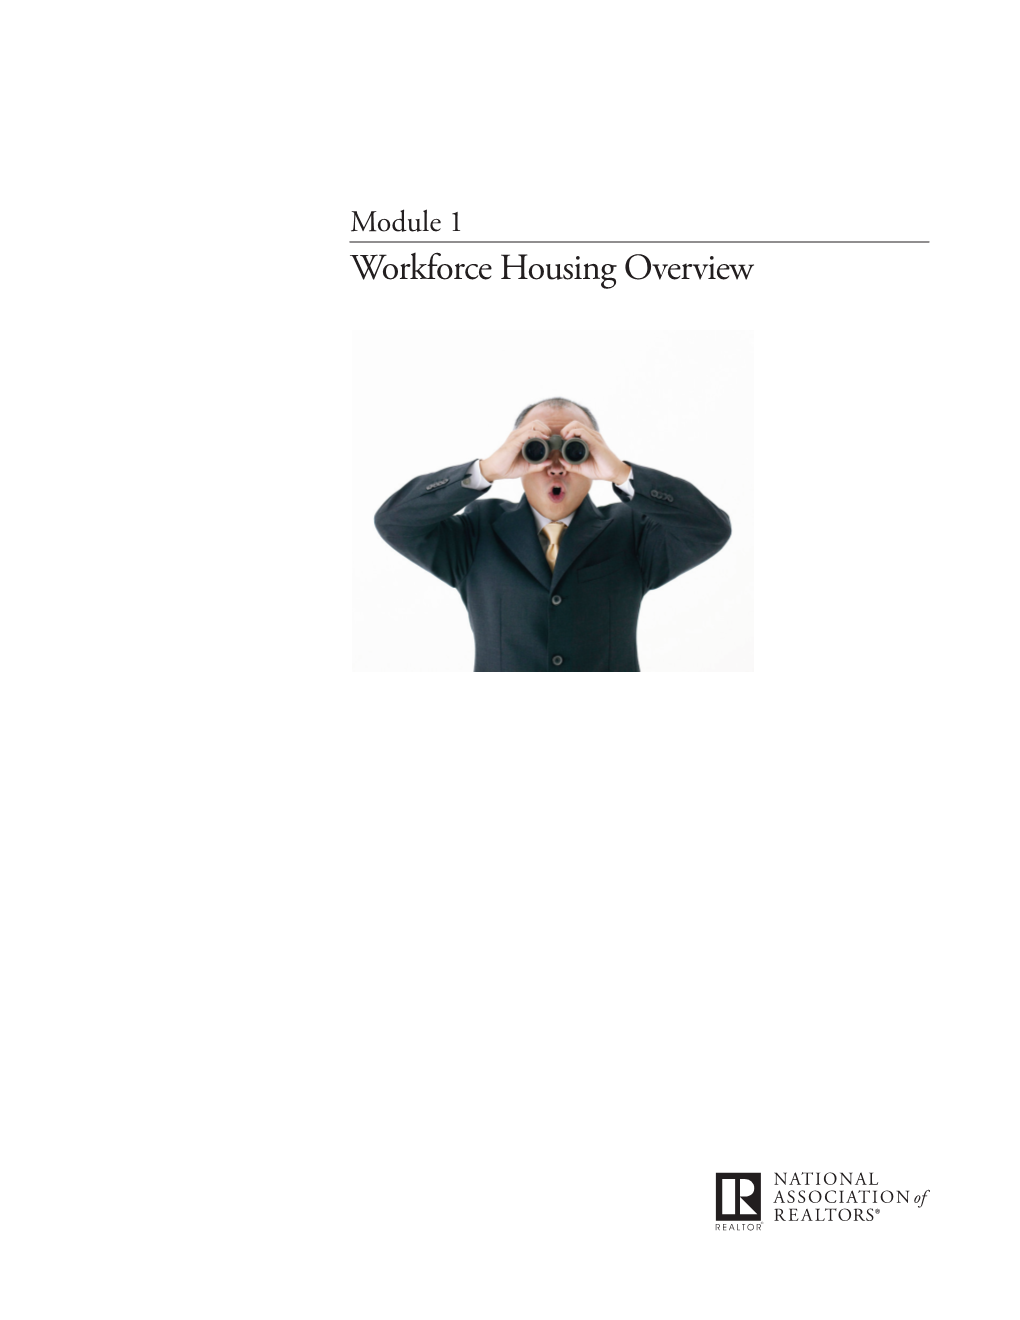 Workforce Housing Overview Slide 1